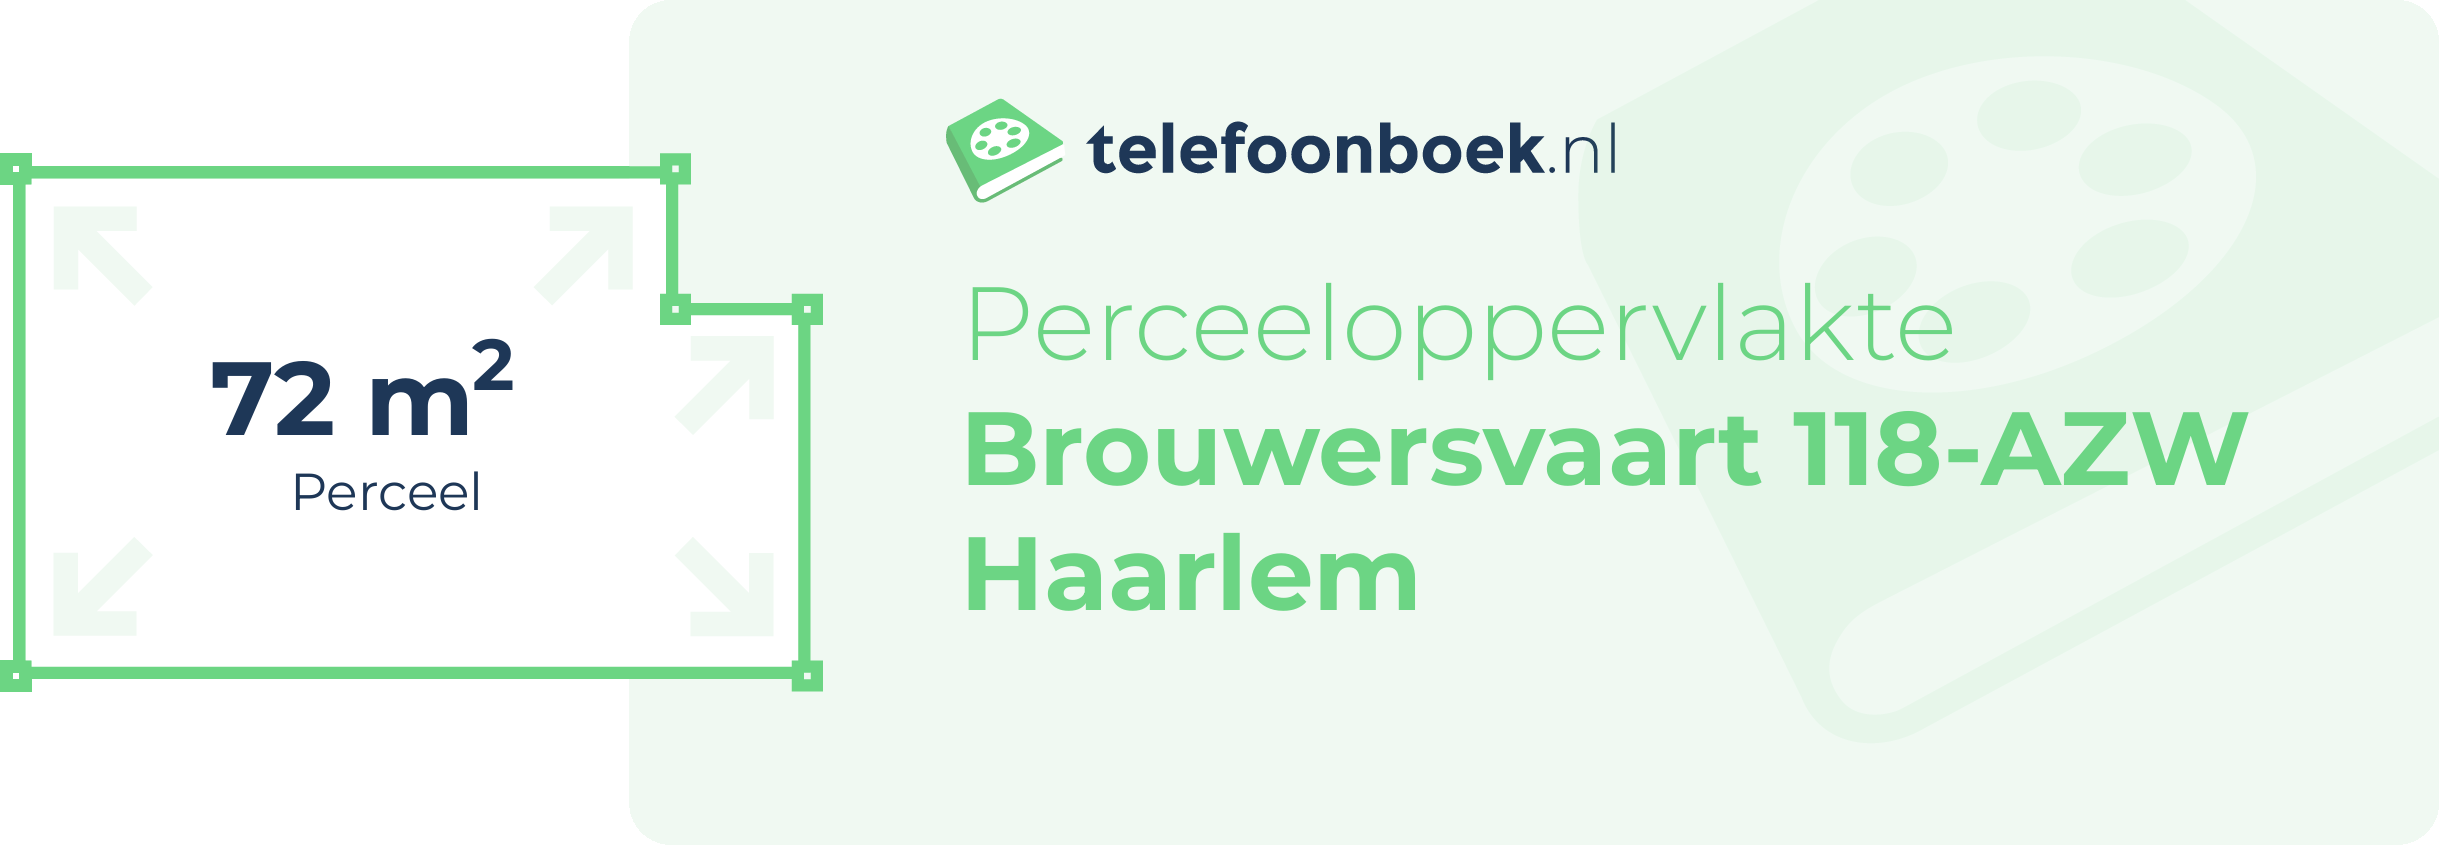 Perceeloppervlakte Brouwersvaart 118-AZW Haarlem